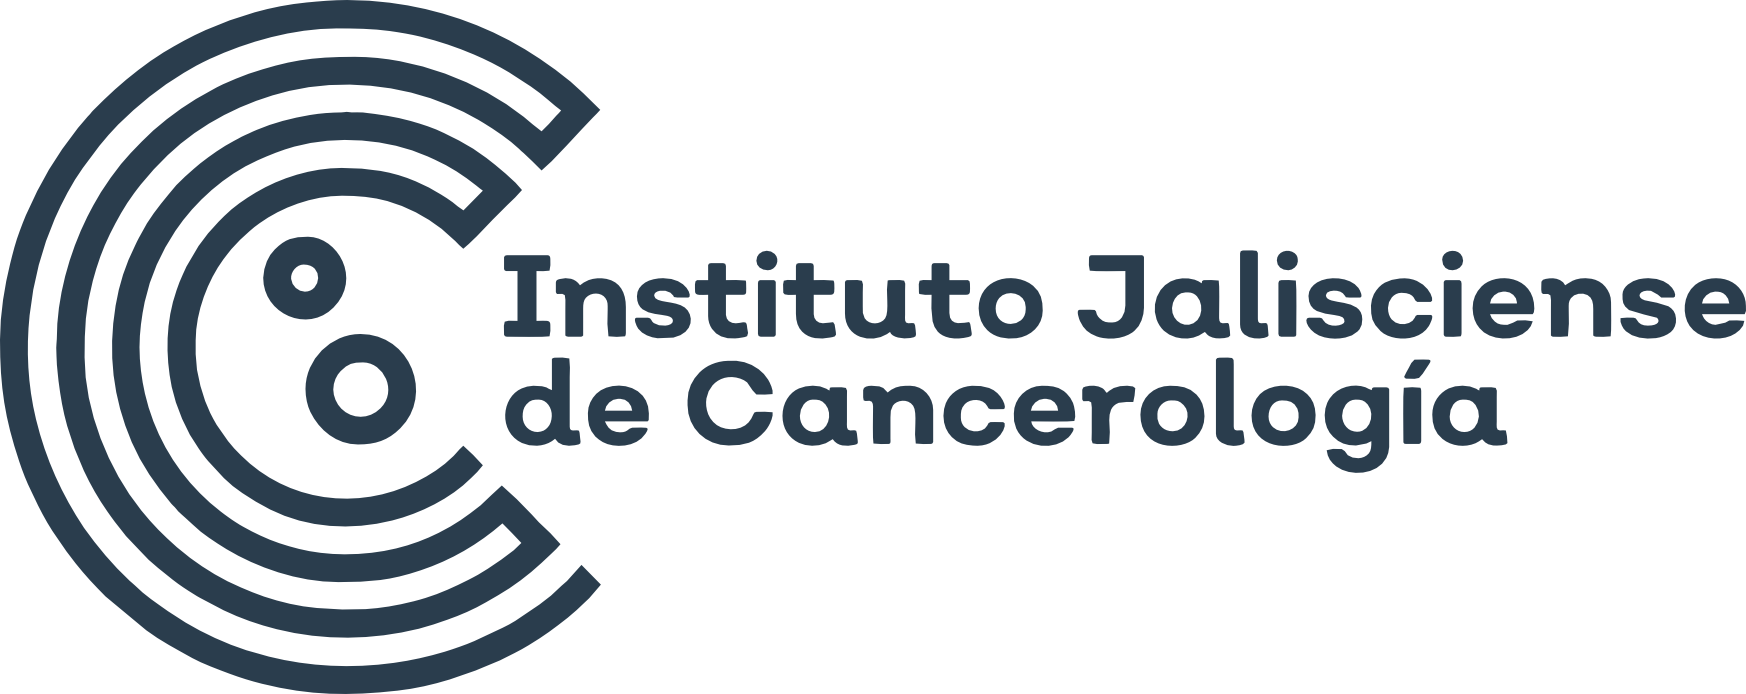 jyg logo cancerologia jyg.mx